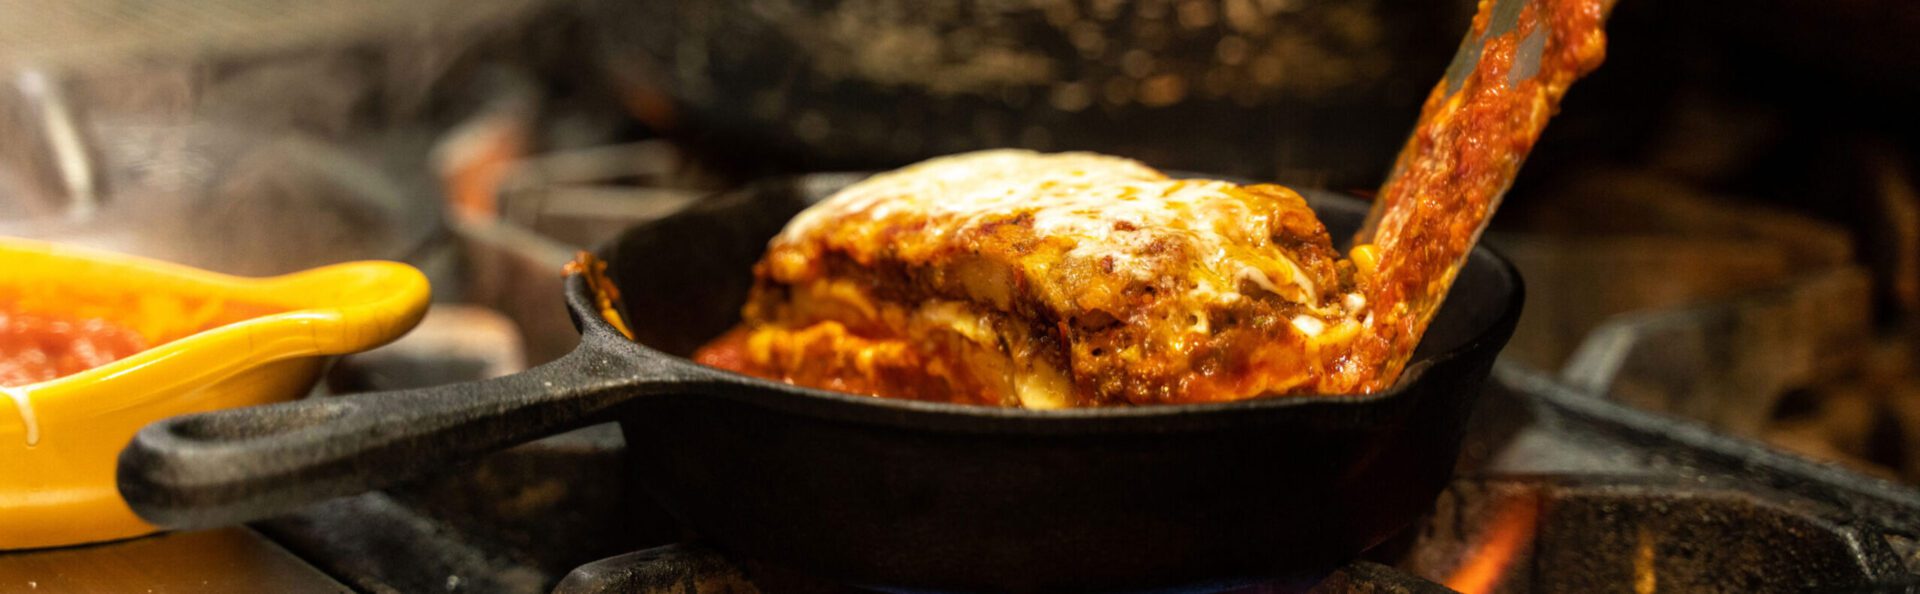 A close up of a piece of lasagna in a pan